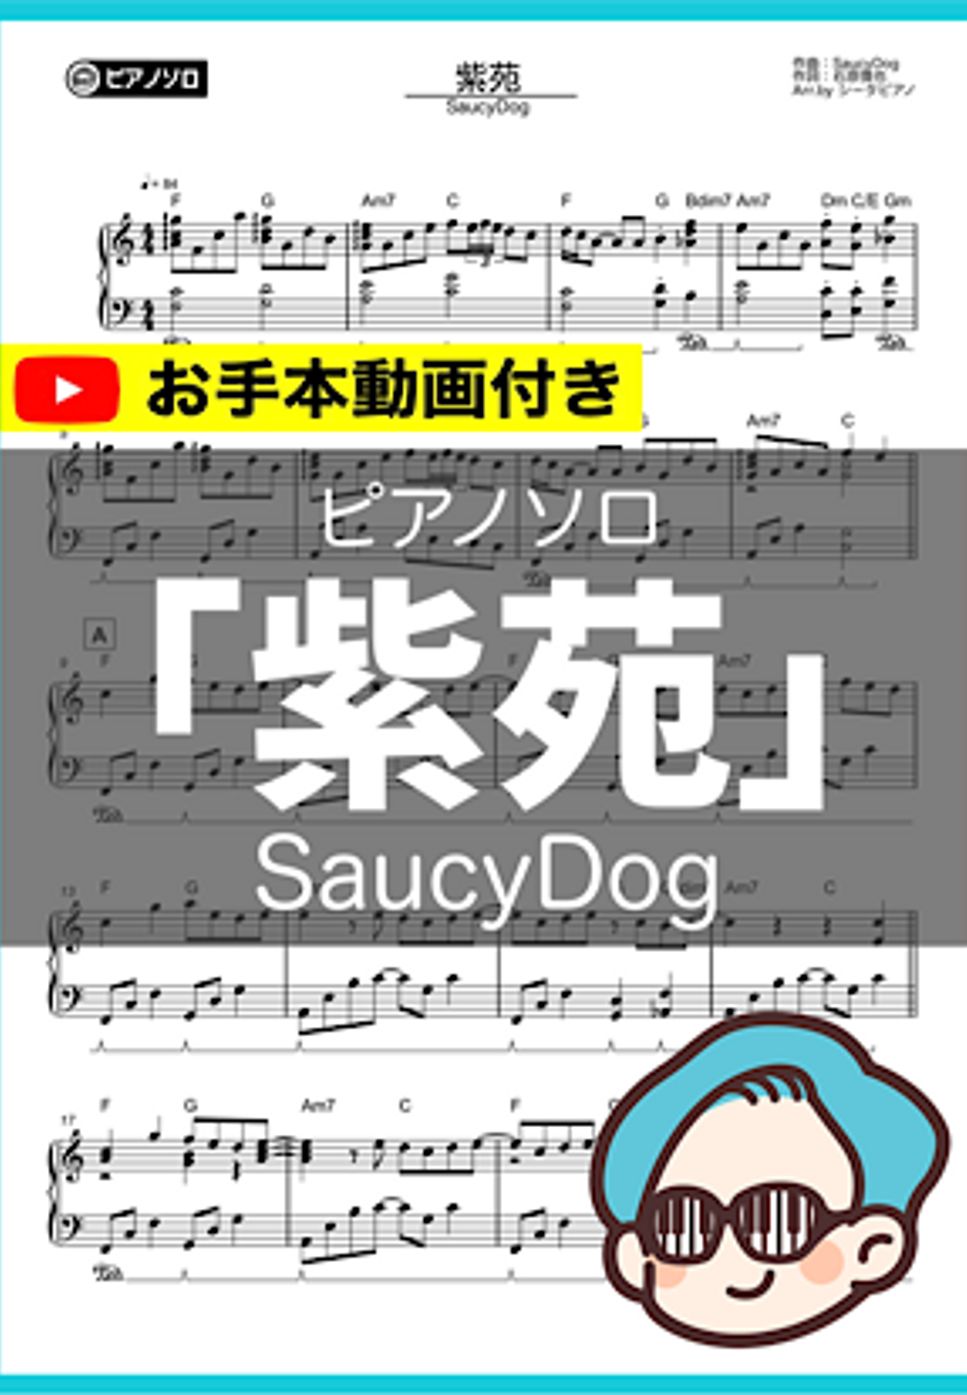 SaucyDog - 「紫苑」 by シータピアノ